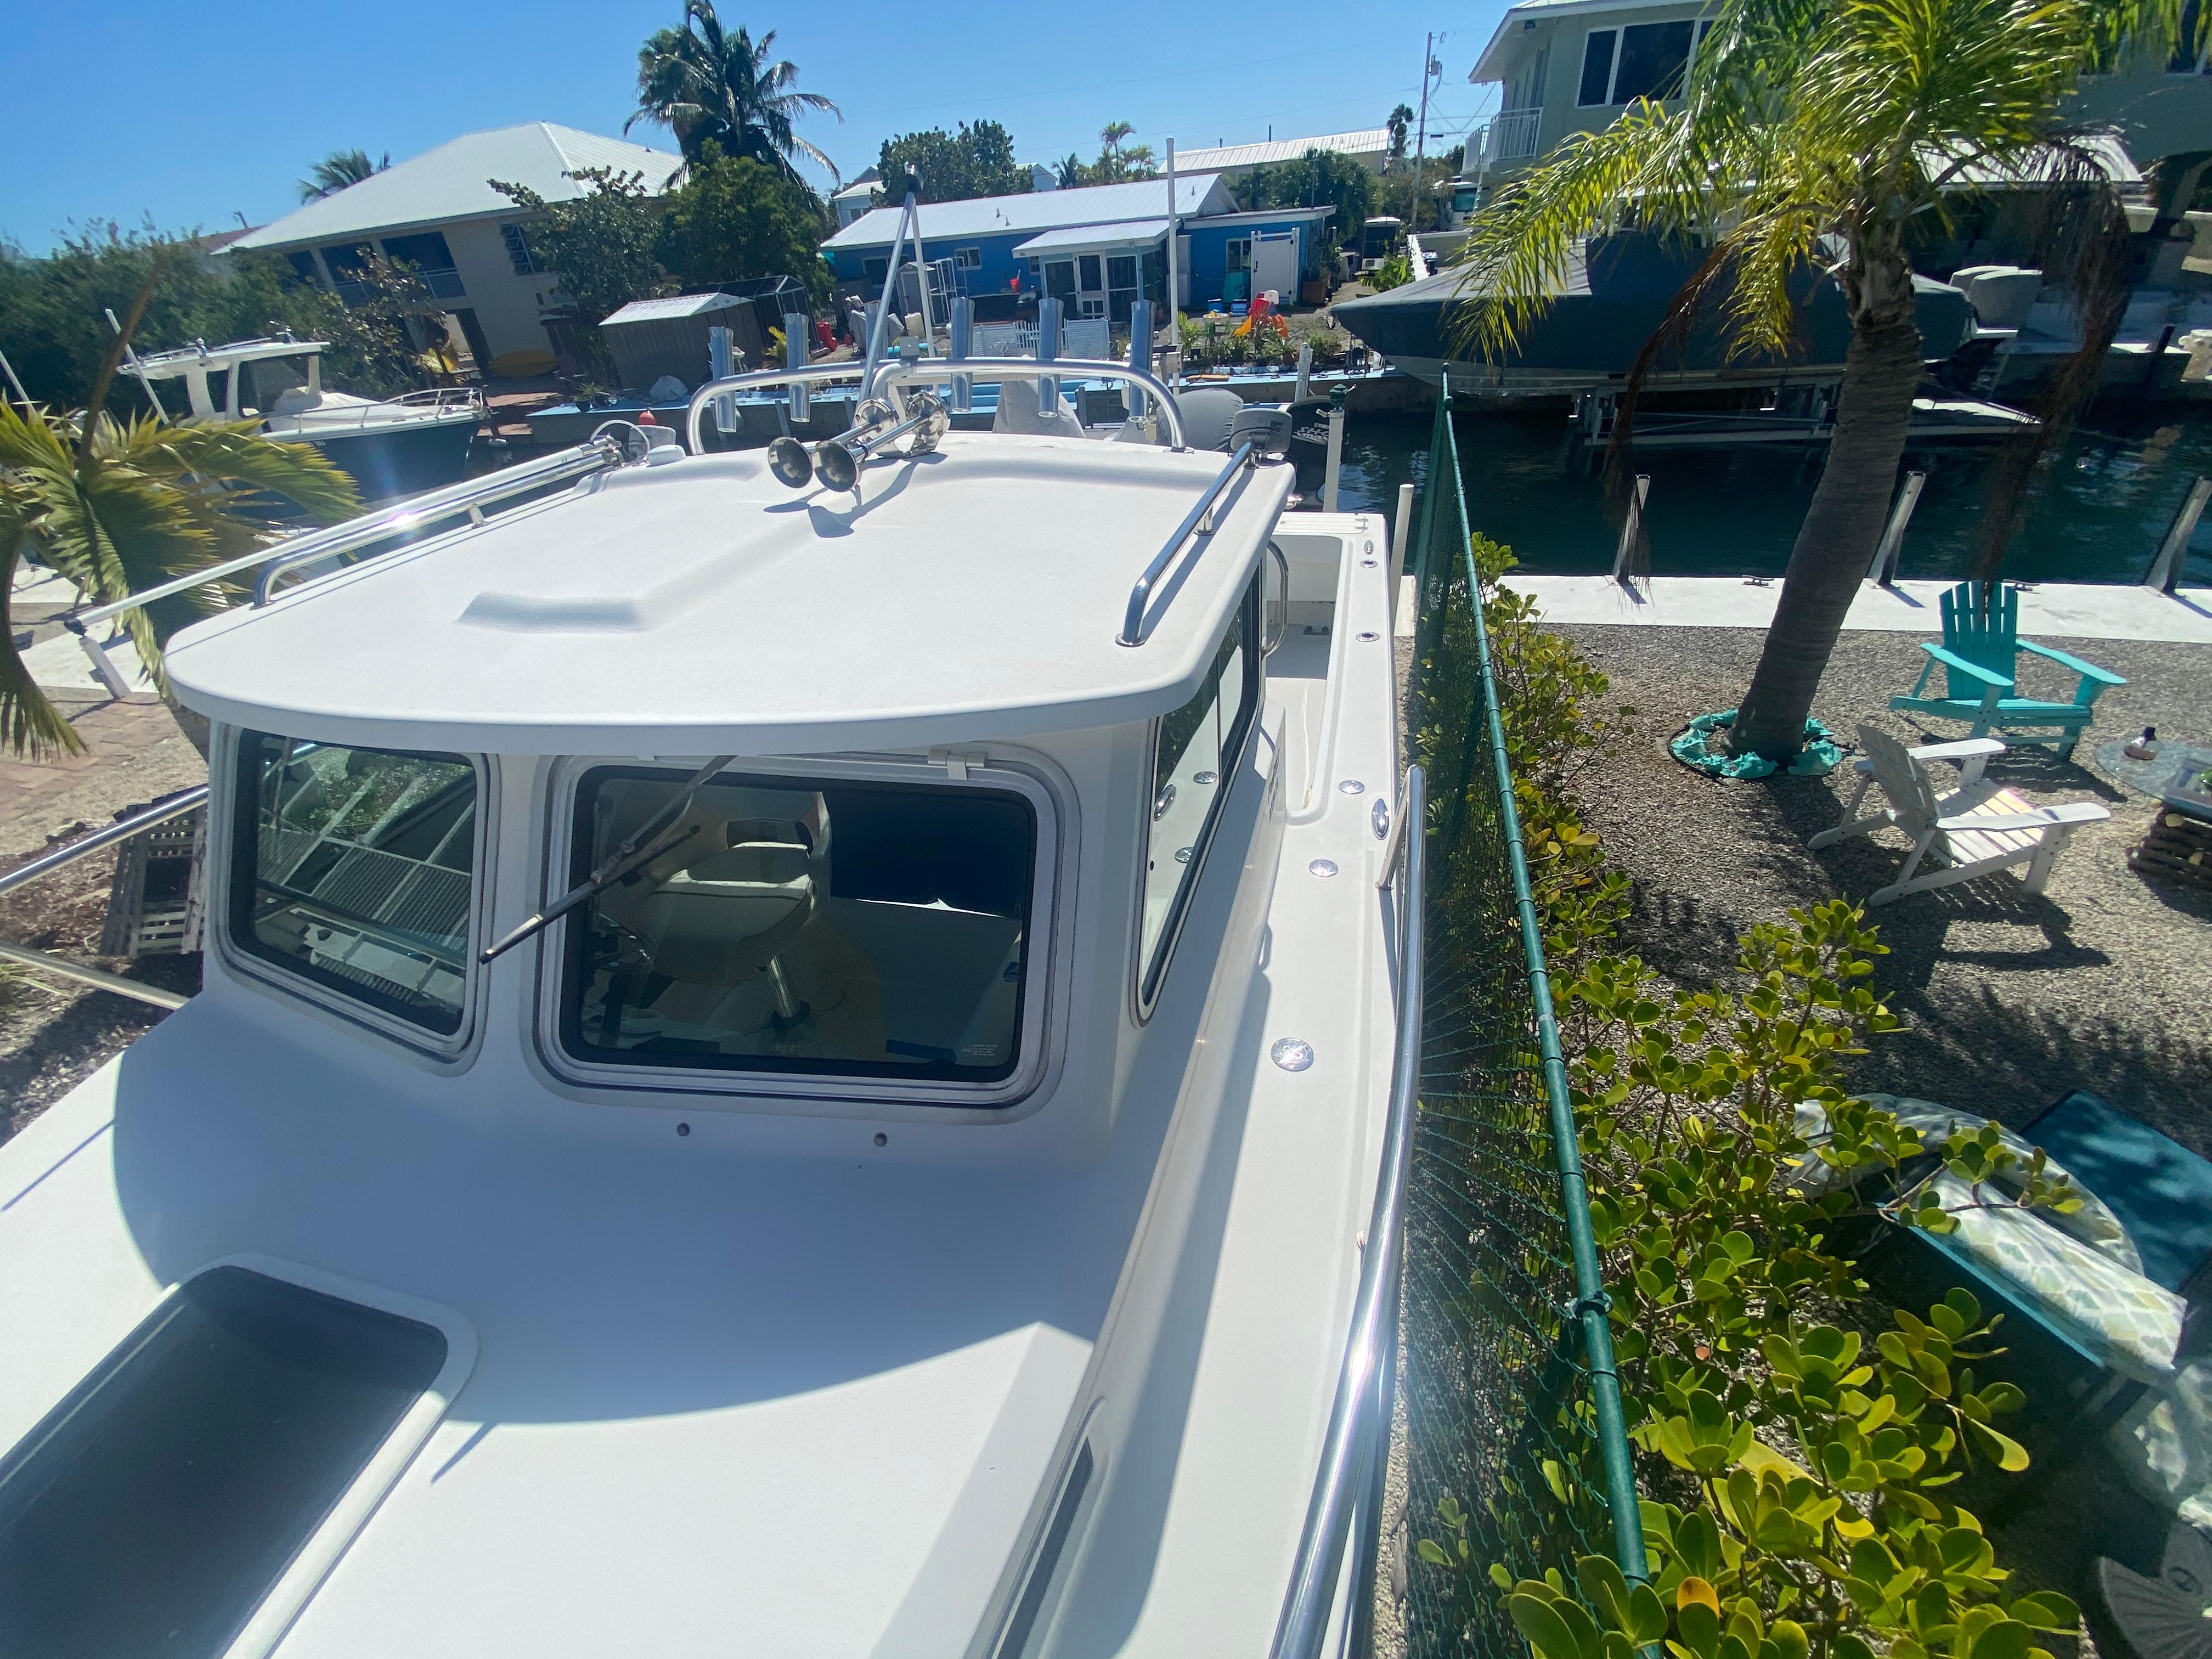 New 2015 Parker 2320 Sl, 33043 Big Pine Key - Boat Trader